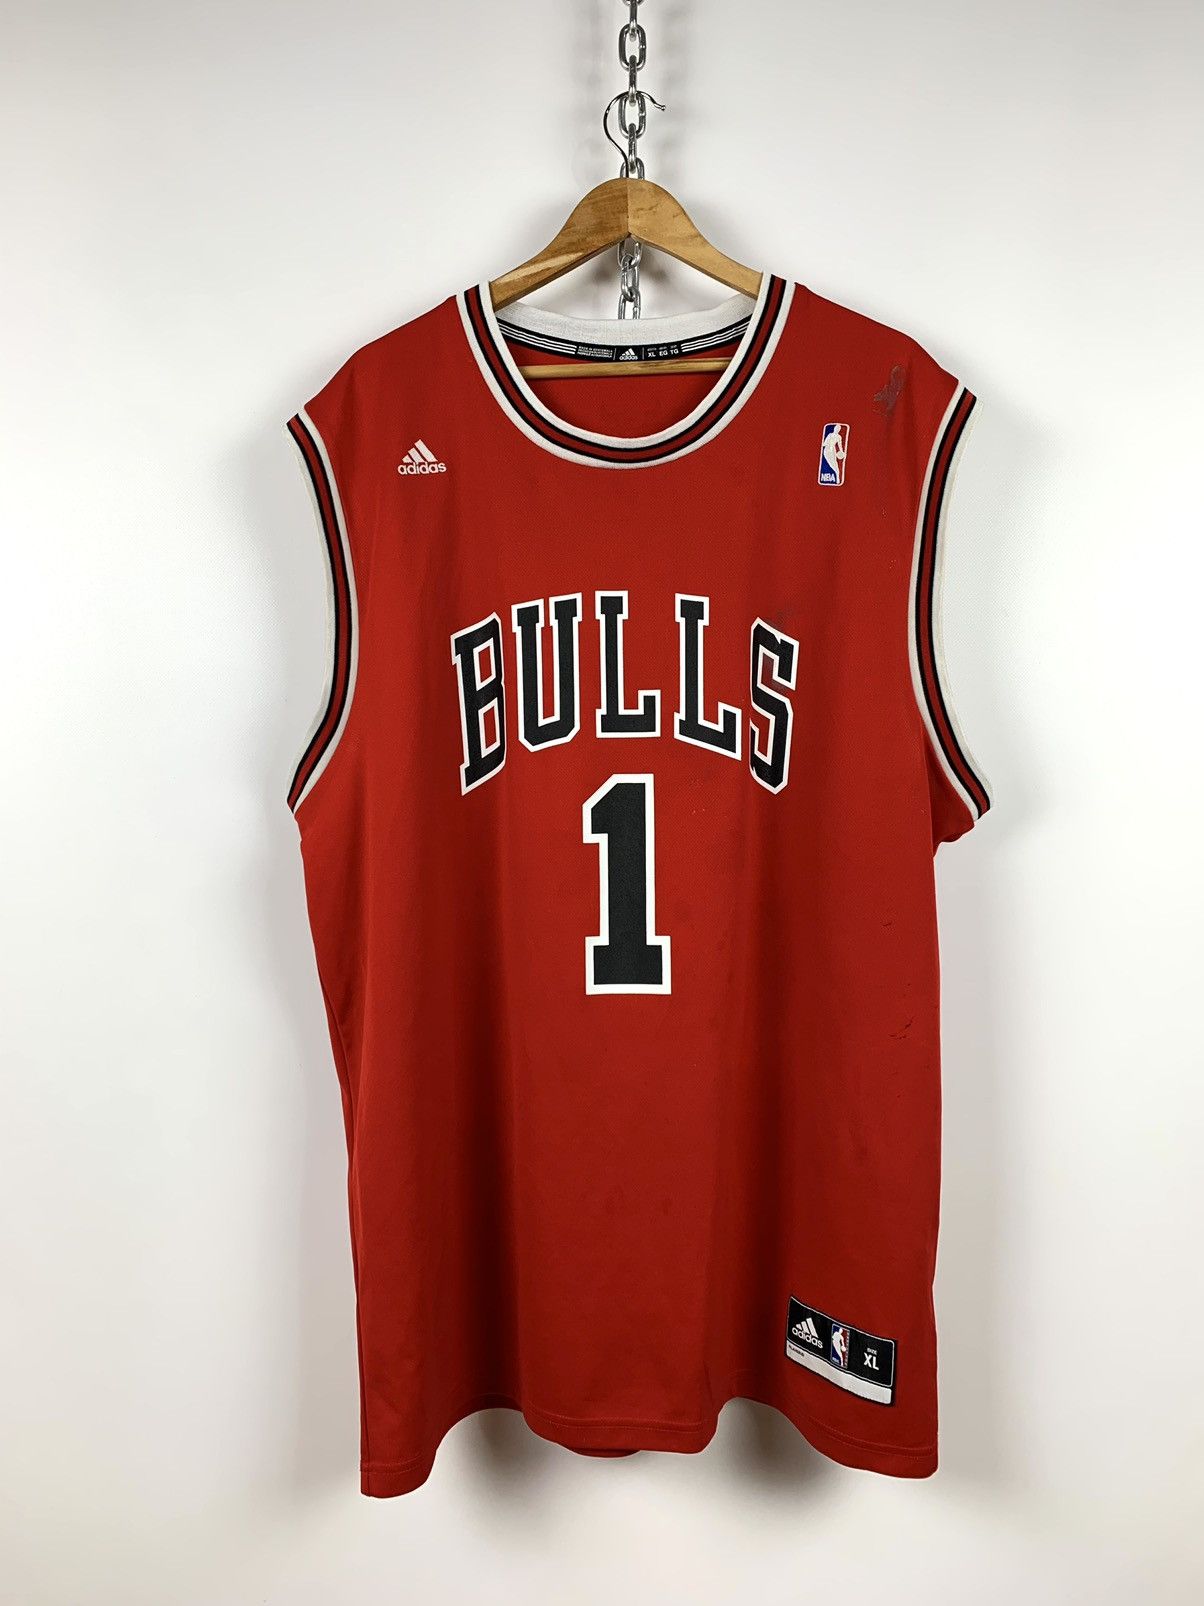 Adidas Chicago Bulls Rose Jersey NBA